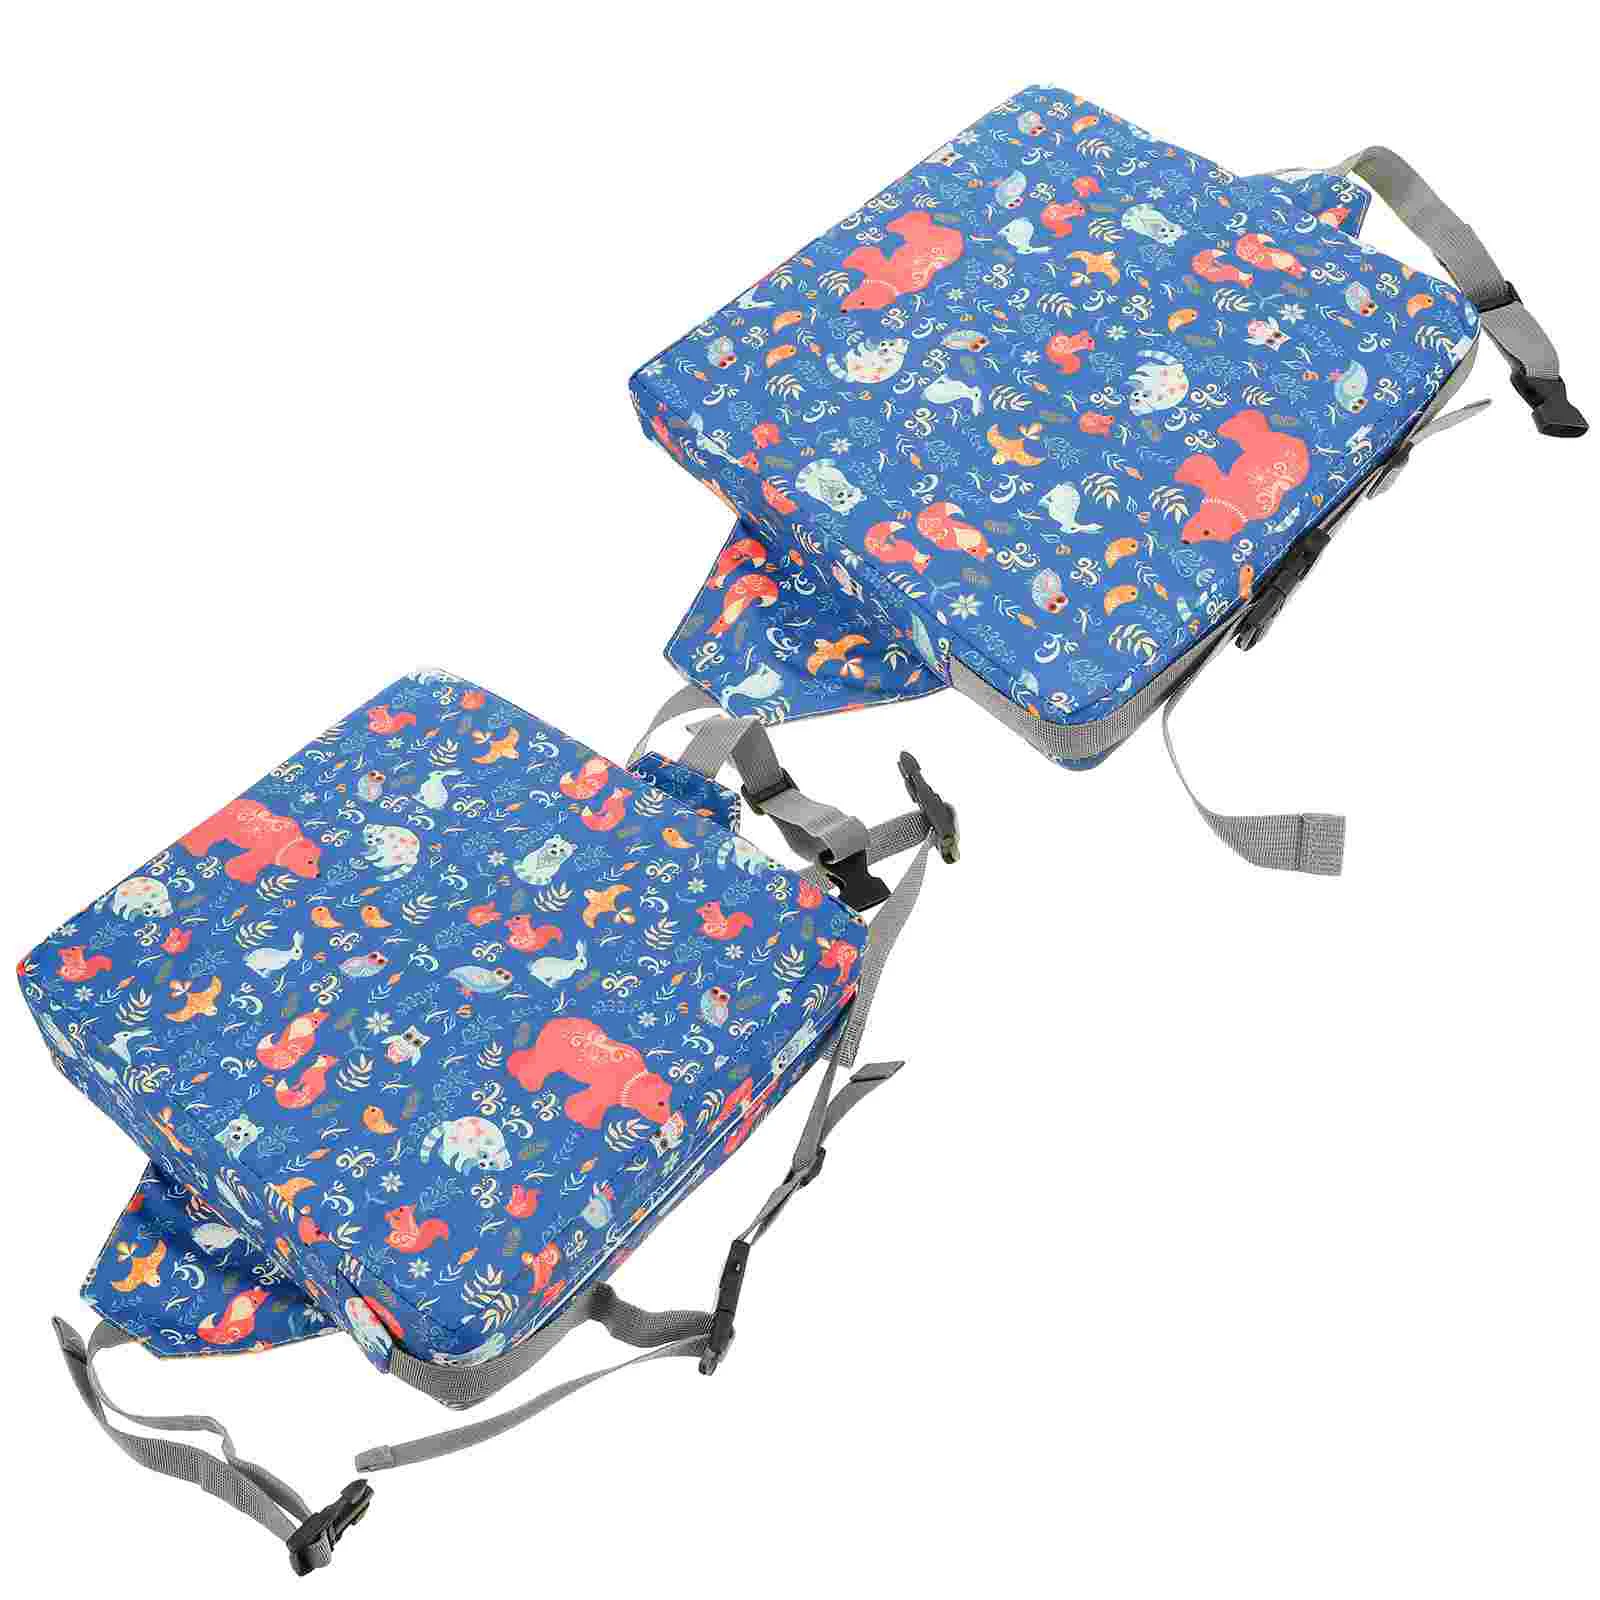 Booster Seat High Chair Fabric Square Cushion High Chair Pad Baby Portable High Chair Infant Chair Pad Kids Chair Increasing